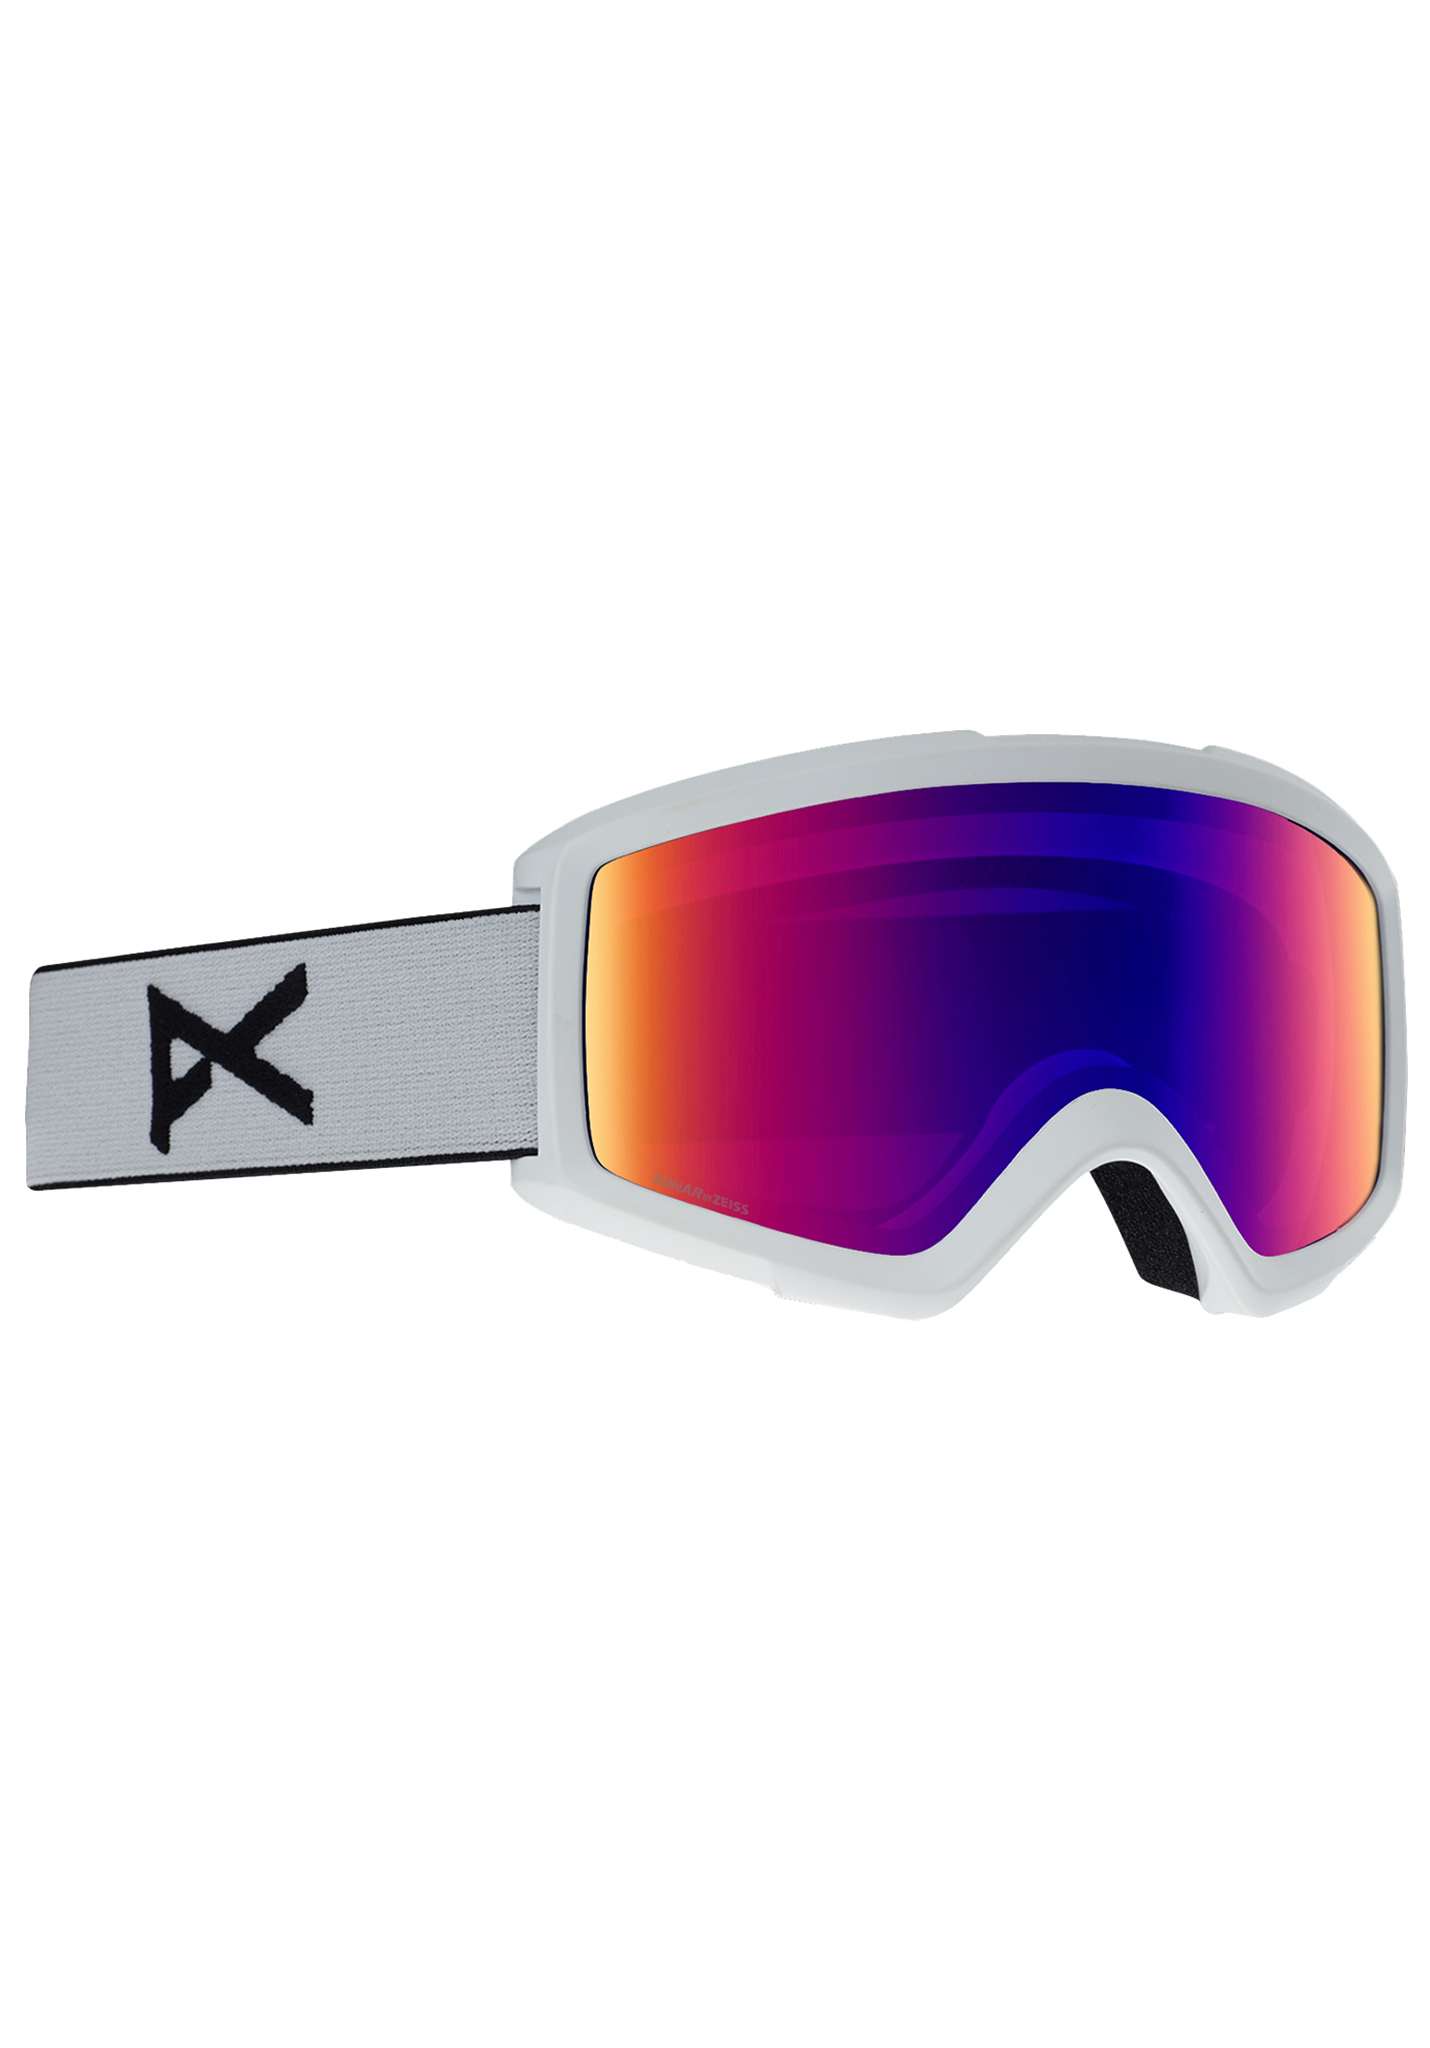 Anon Helix 2 Sonar Snowboardbrillen